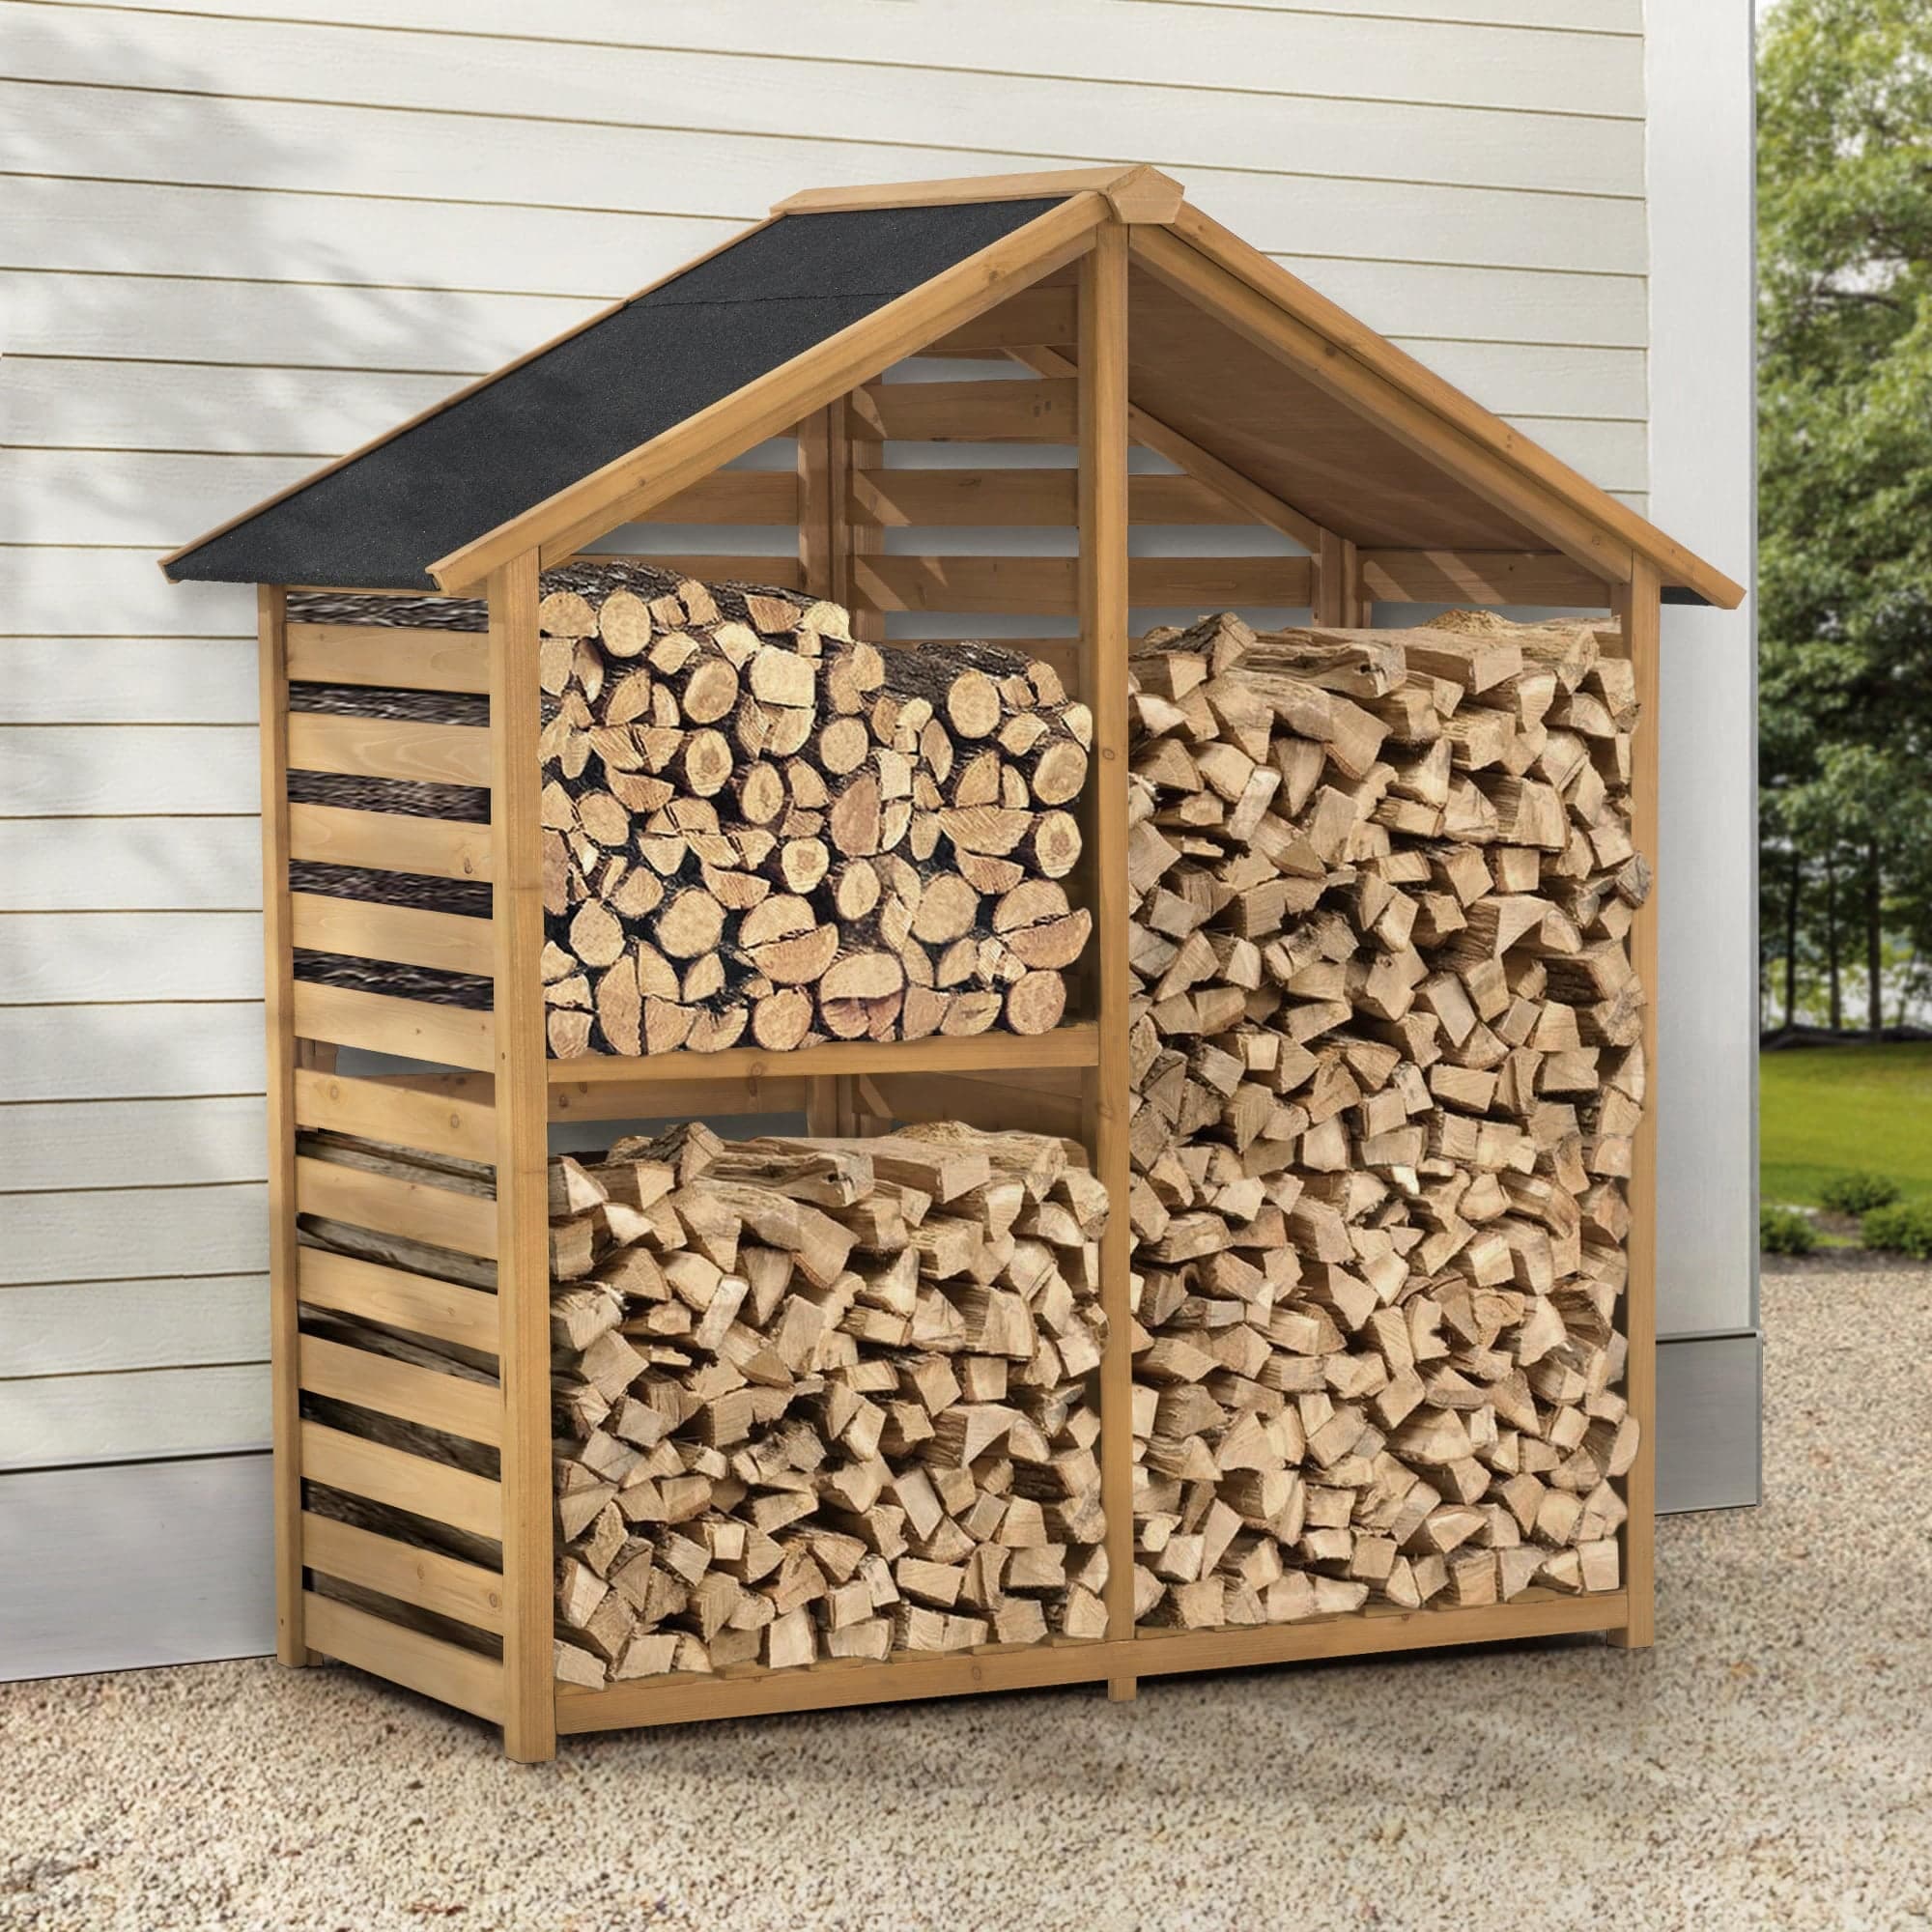 YardCove Highwood Outdoor Wooden Storage Shed, Firewood Storage Rack with Asphalt Roof and 2-Tier Shelves.